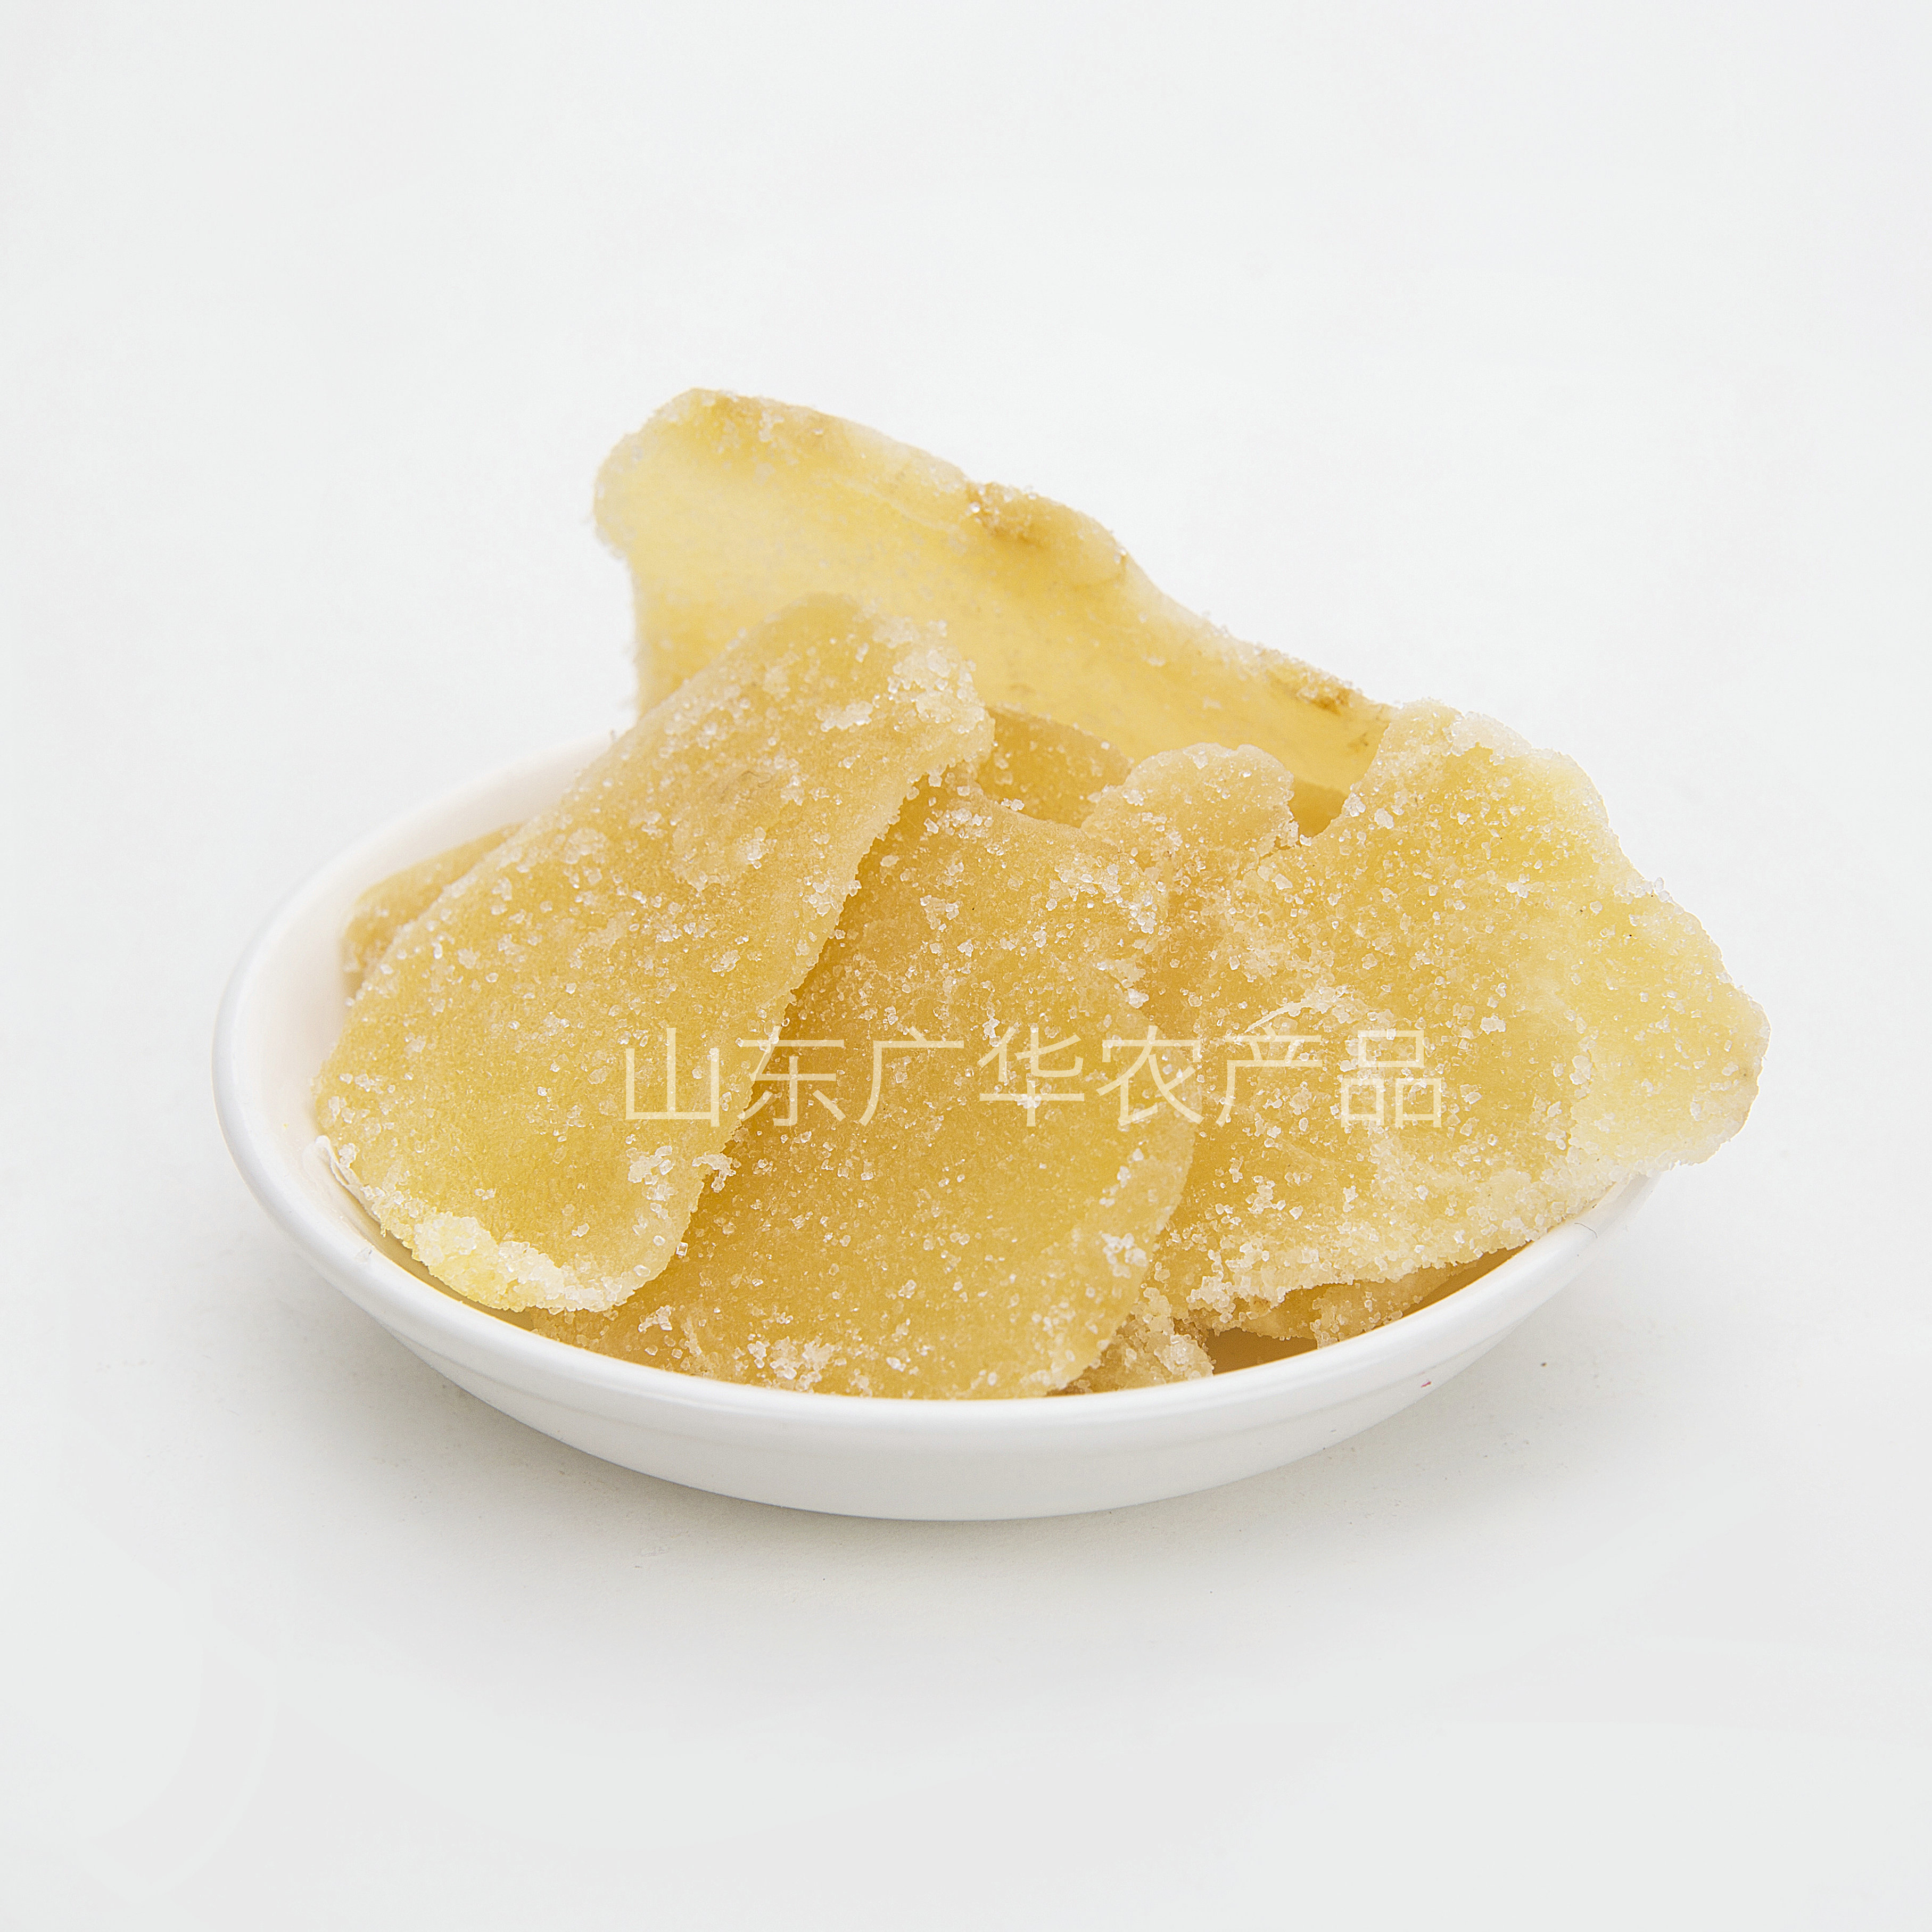 Имбирь сушеный в сахаре лепестки (слайсы)